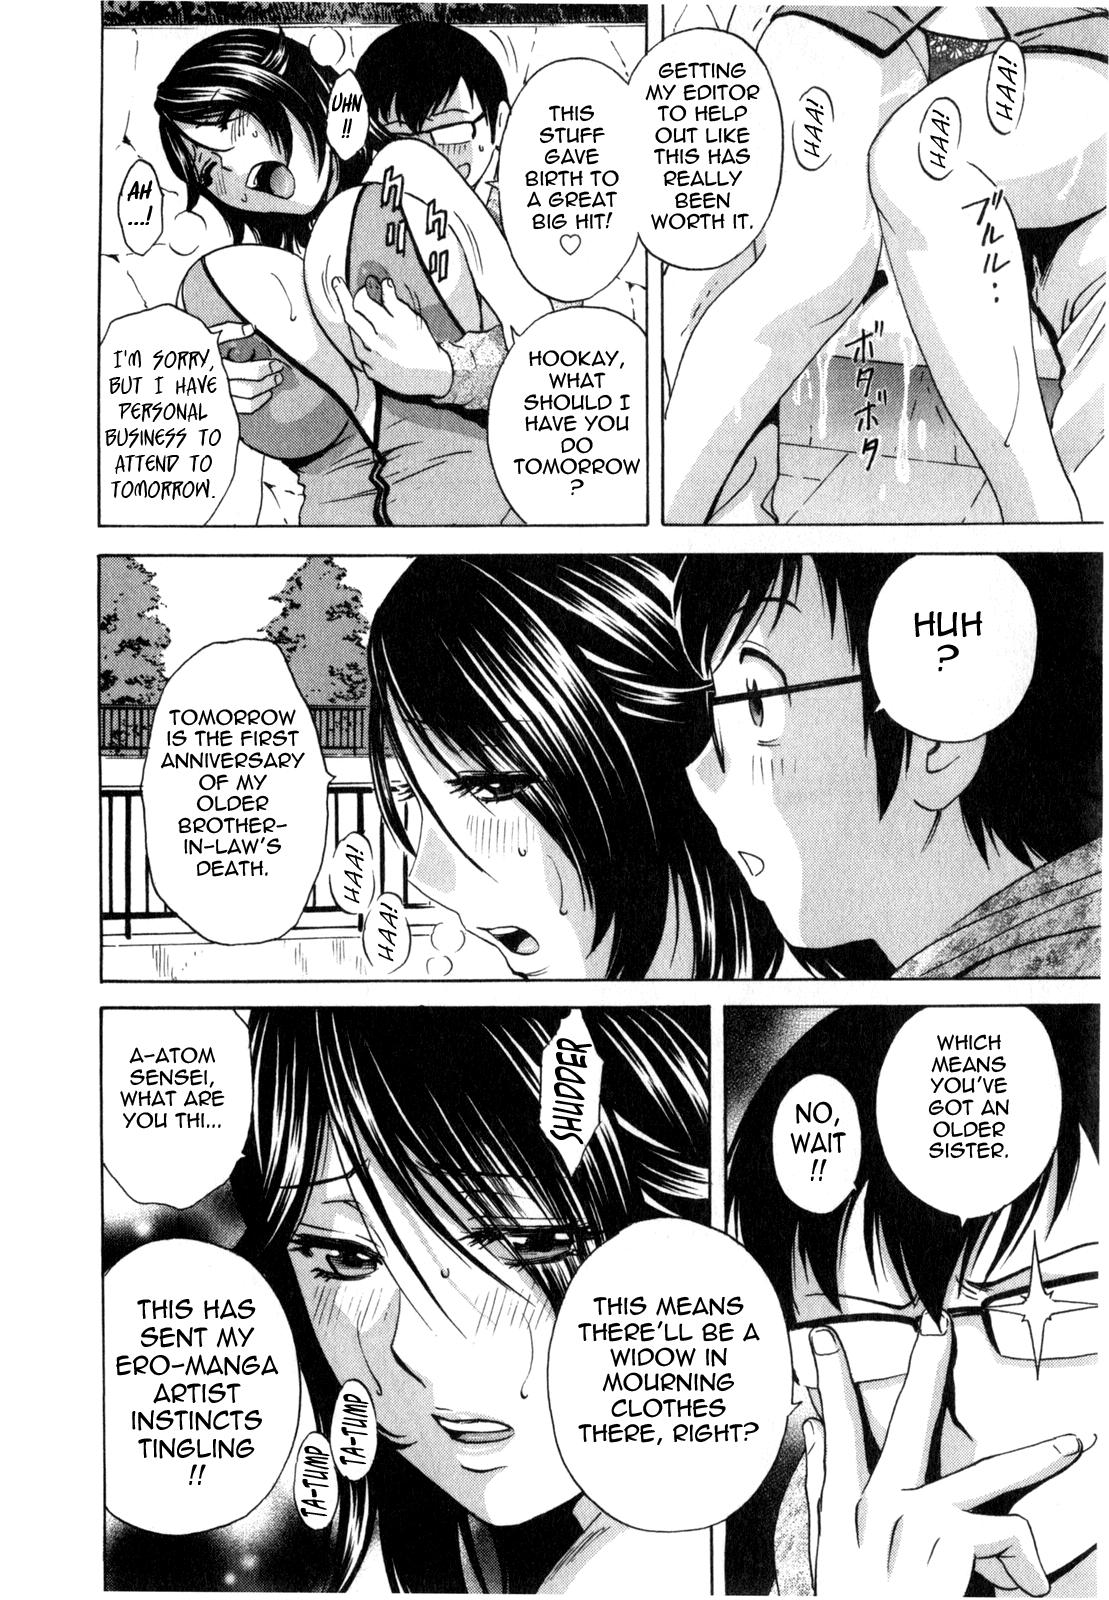 [Hidemaru] Life with Married Women Just Like a Manga 3 - Ch. 1-8 [English] {Tadanohito} 91